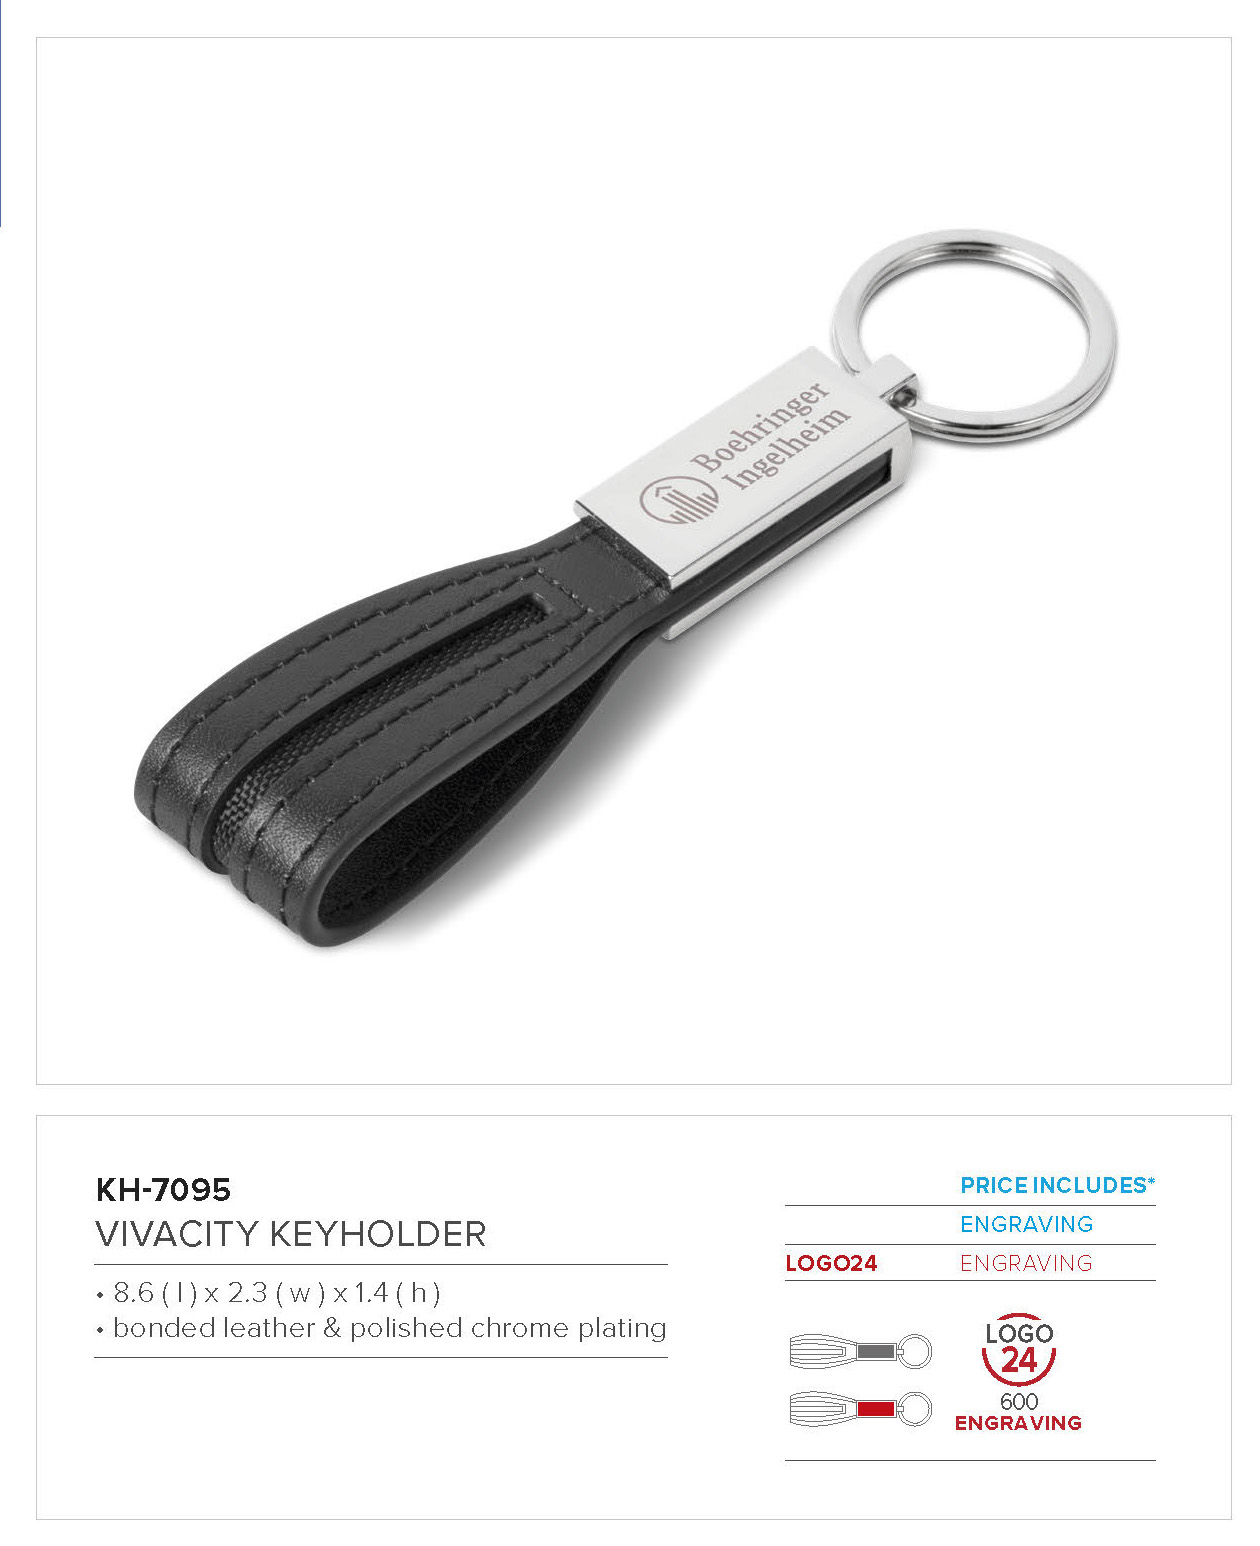 KH-7095 - Vivacity Keyholder - Catalogue Image